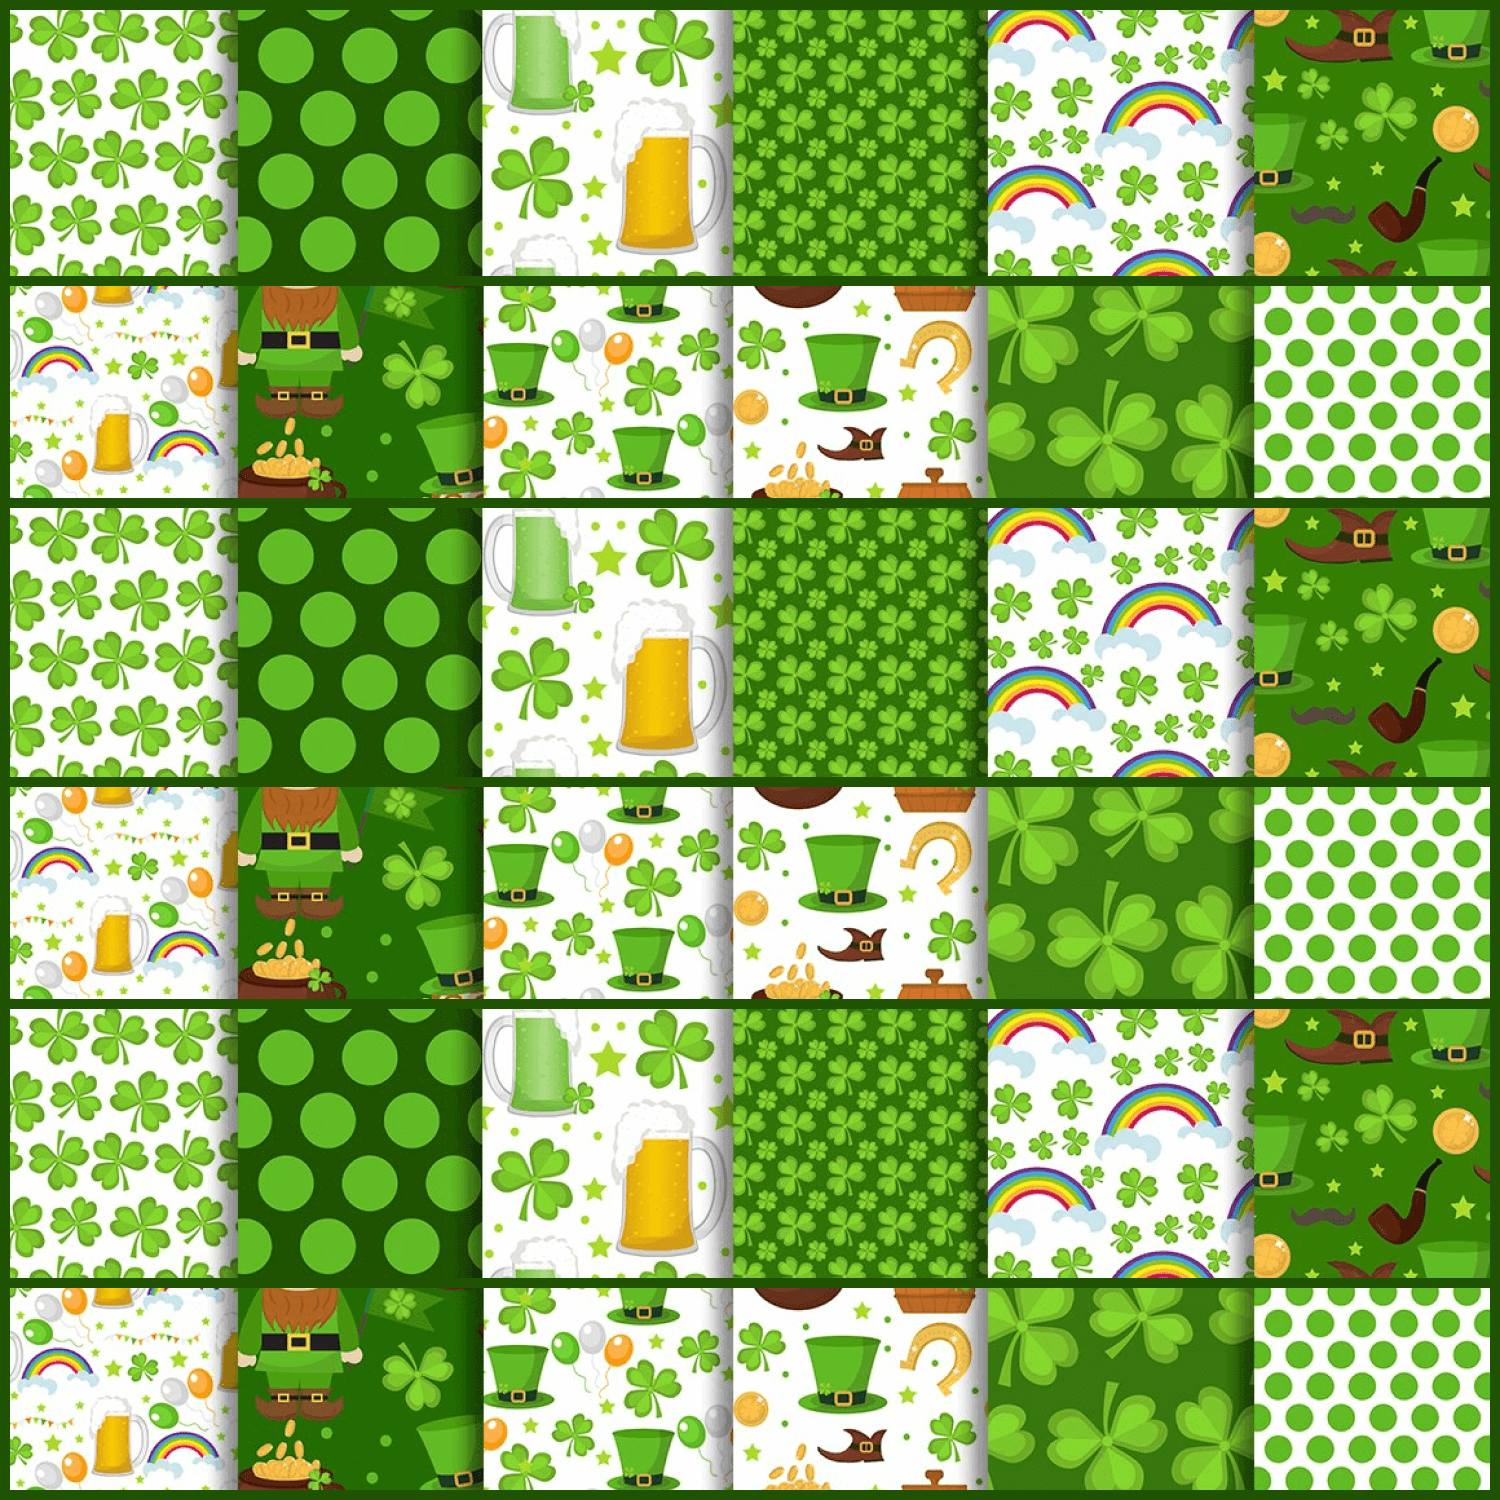 12 Patterns of St. Patrick's Day.